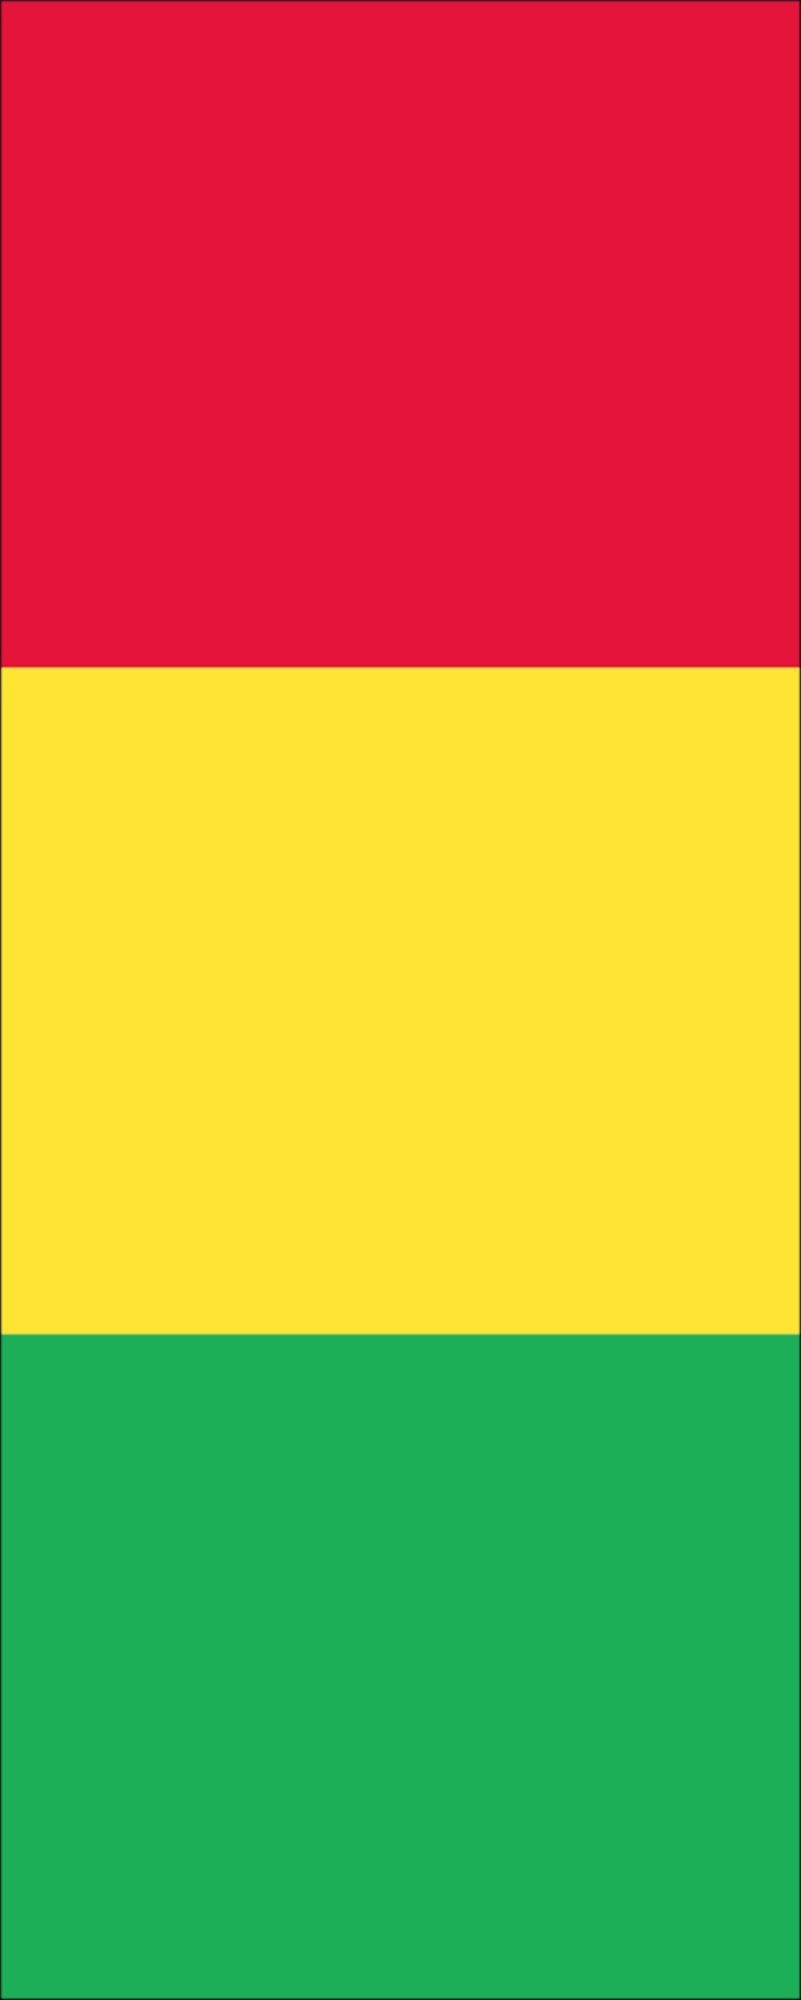 flaggenmeer Flagge Guinea 160 g/m² Hochformat